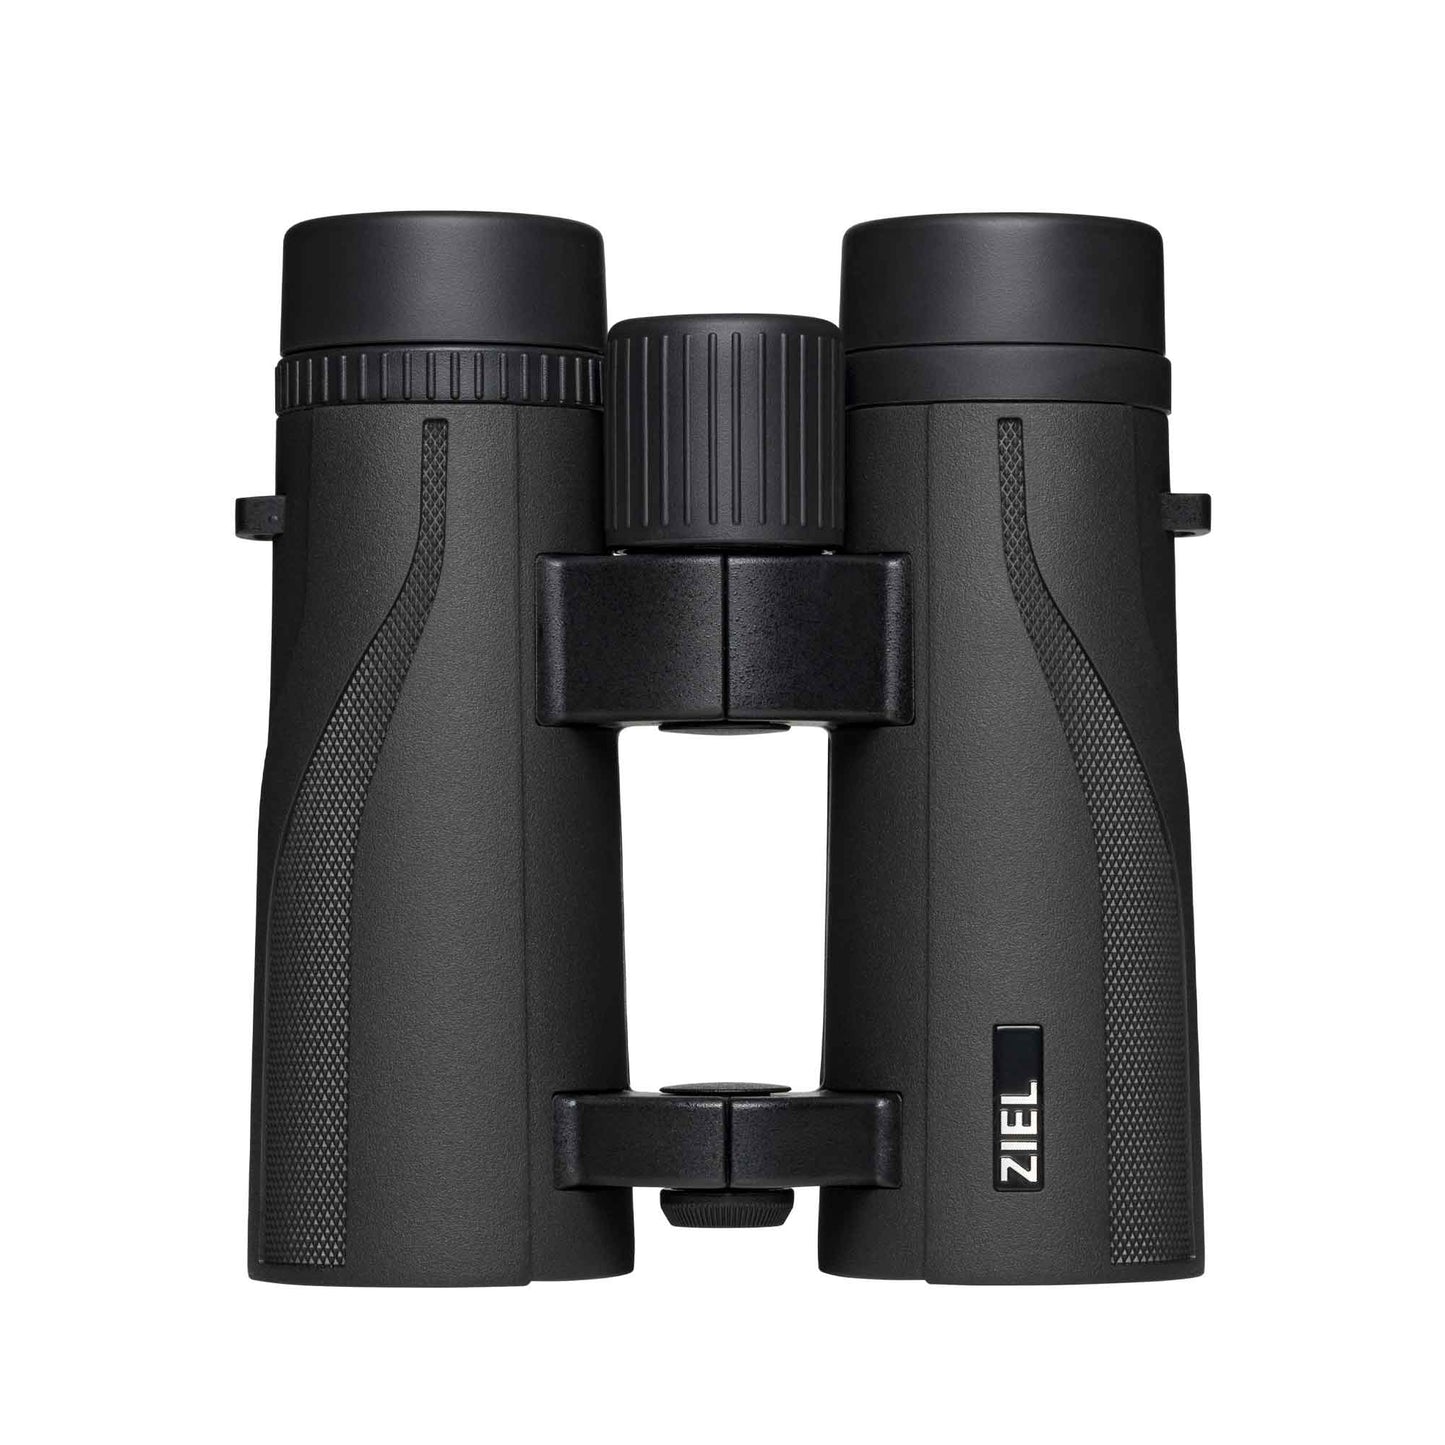 X-PRO 10x42 - Professional Binocular